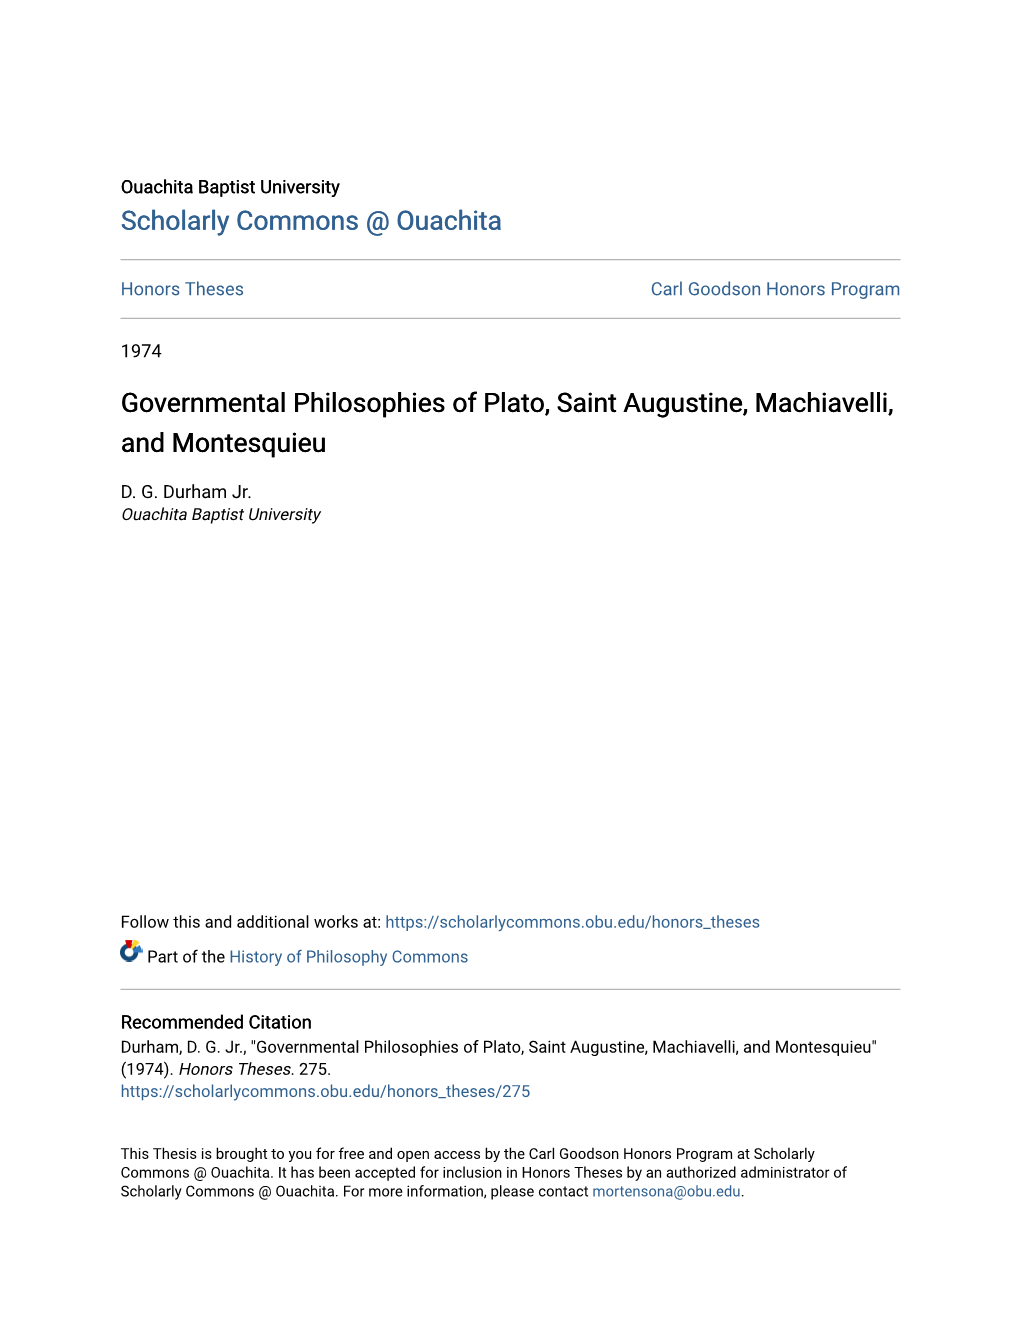 Governmental Philosophies of Plato, Saint Augustine, Machiavelli, and Montesquieu